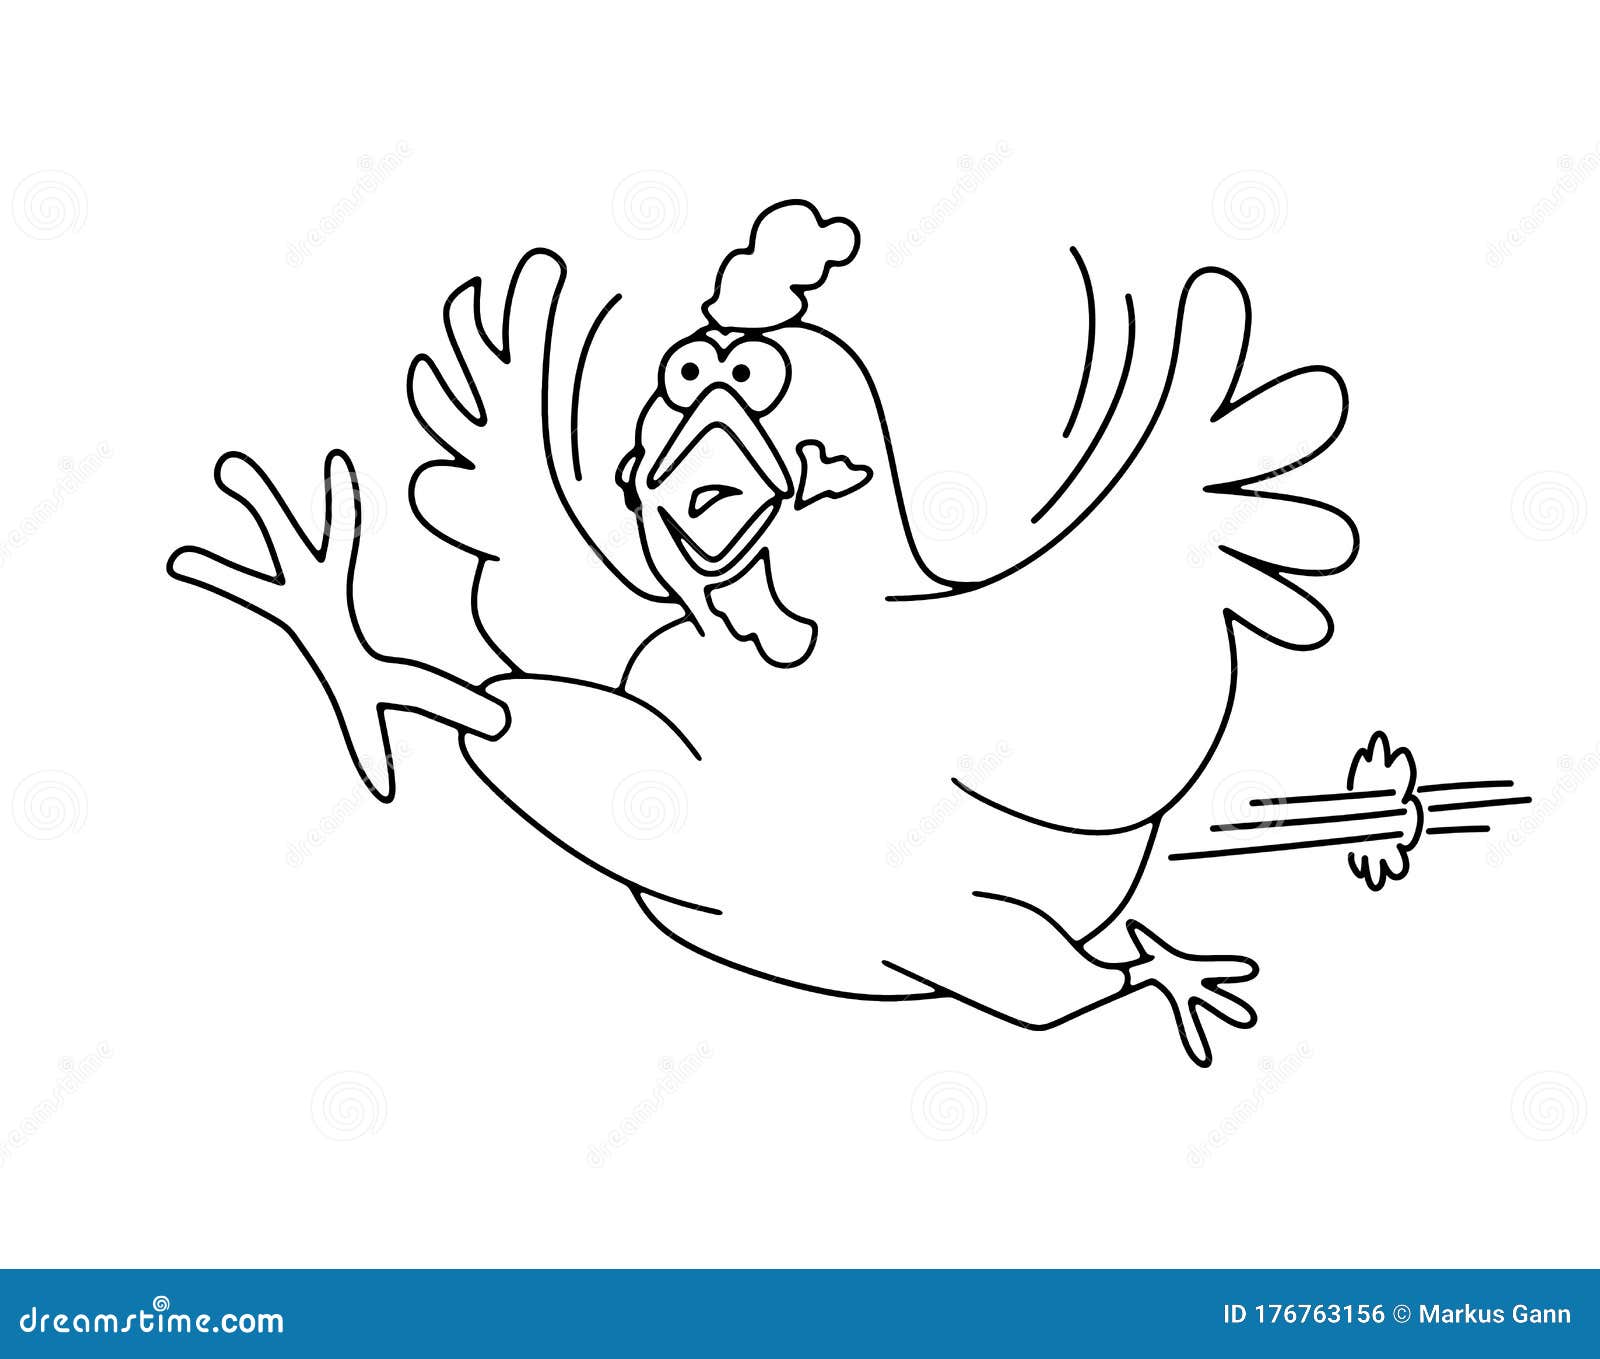 Running Chicken Animation Sprite Sheet Isolated On White Background ...